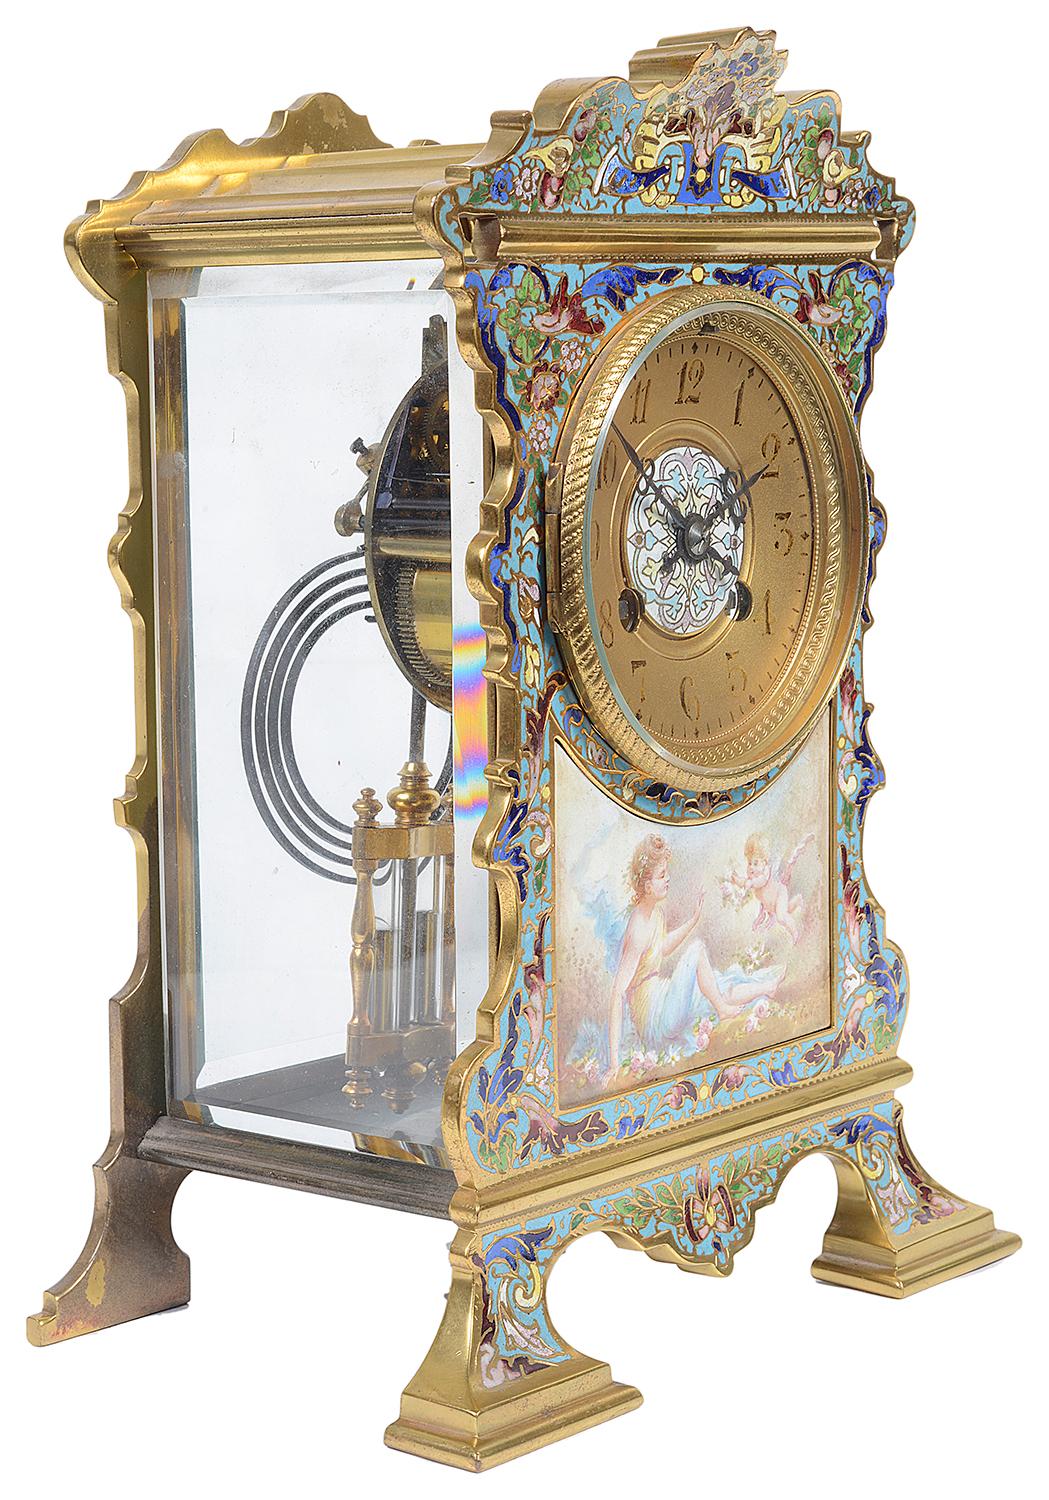 19th century mantel clocks